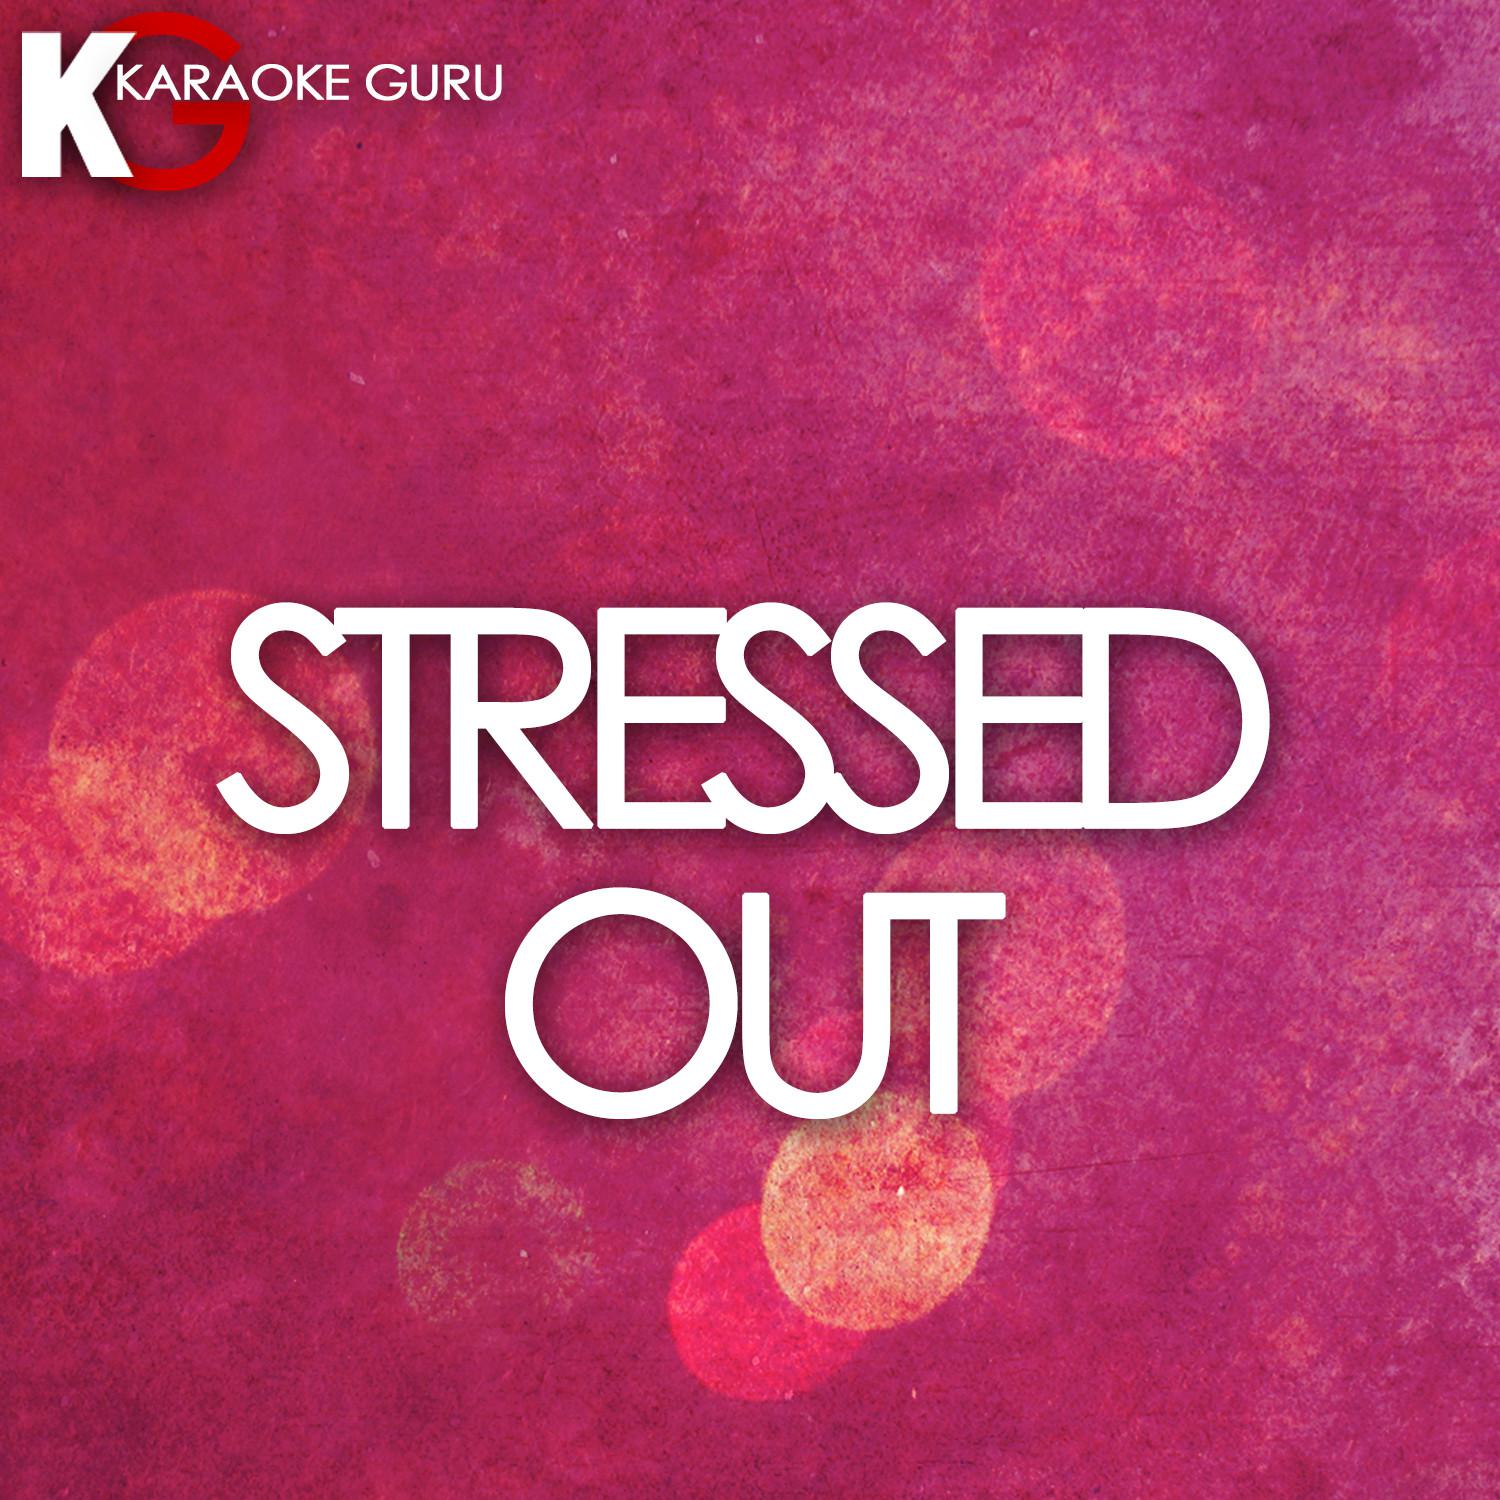 Stressed Out (Originally Performed by Twenty One Pilots) [Karaoke Version] - Single